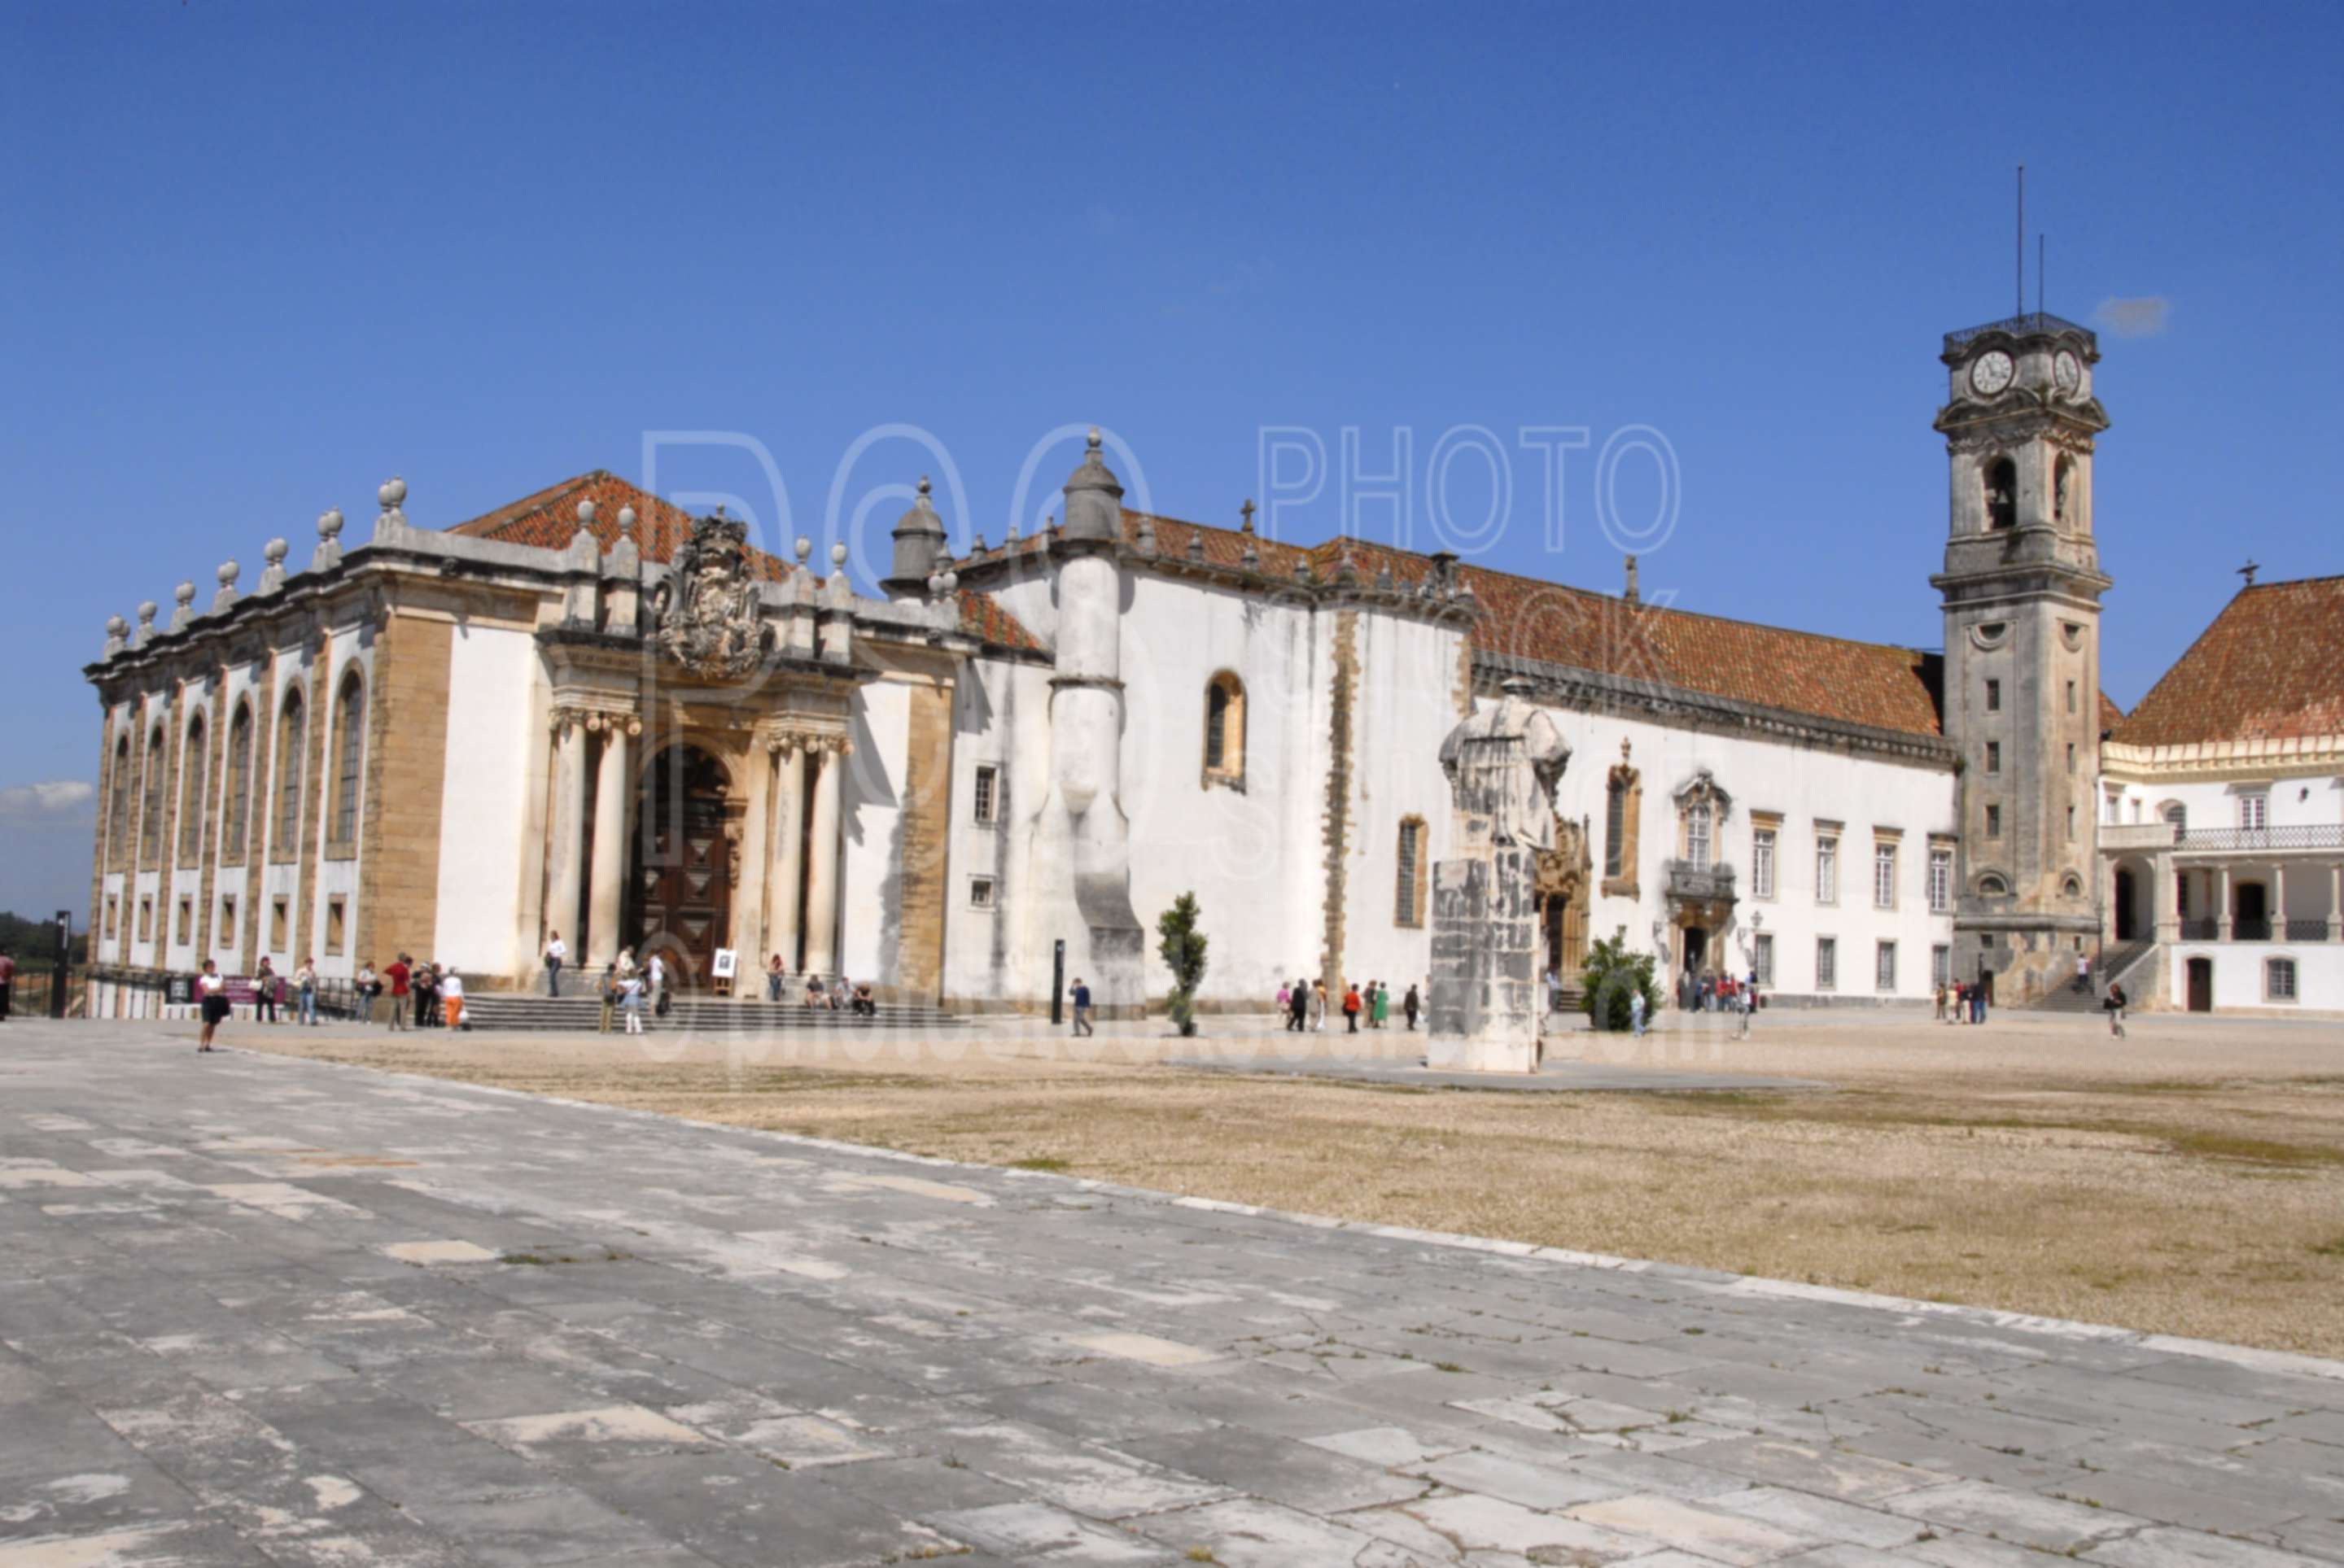 University Plaza,square,plaza,panorama,king diniz,tower,clock tower